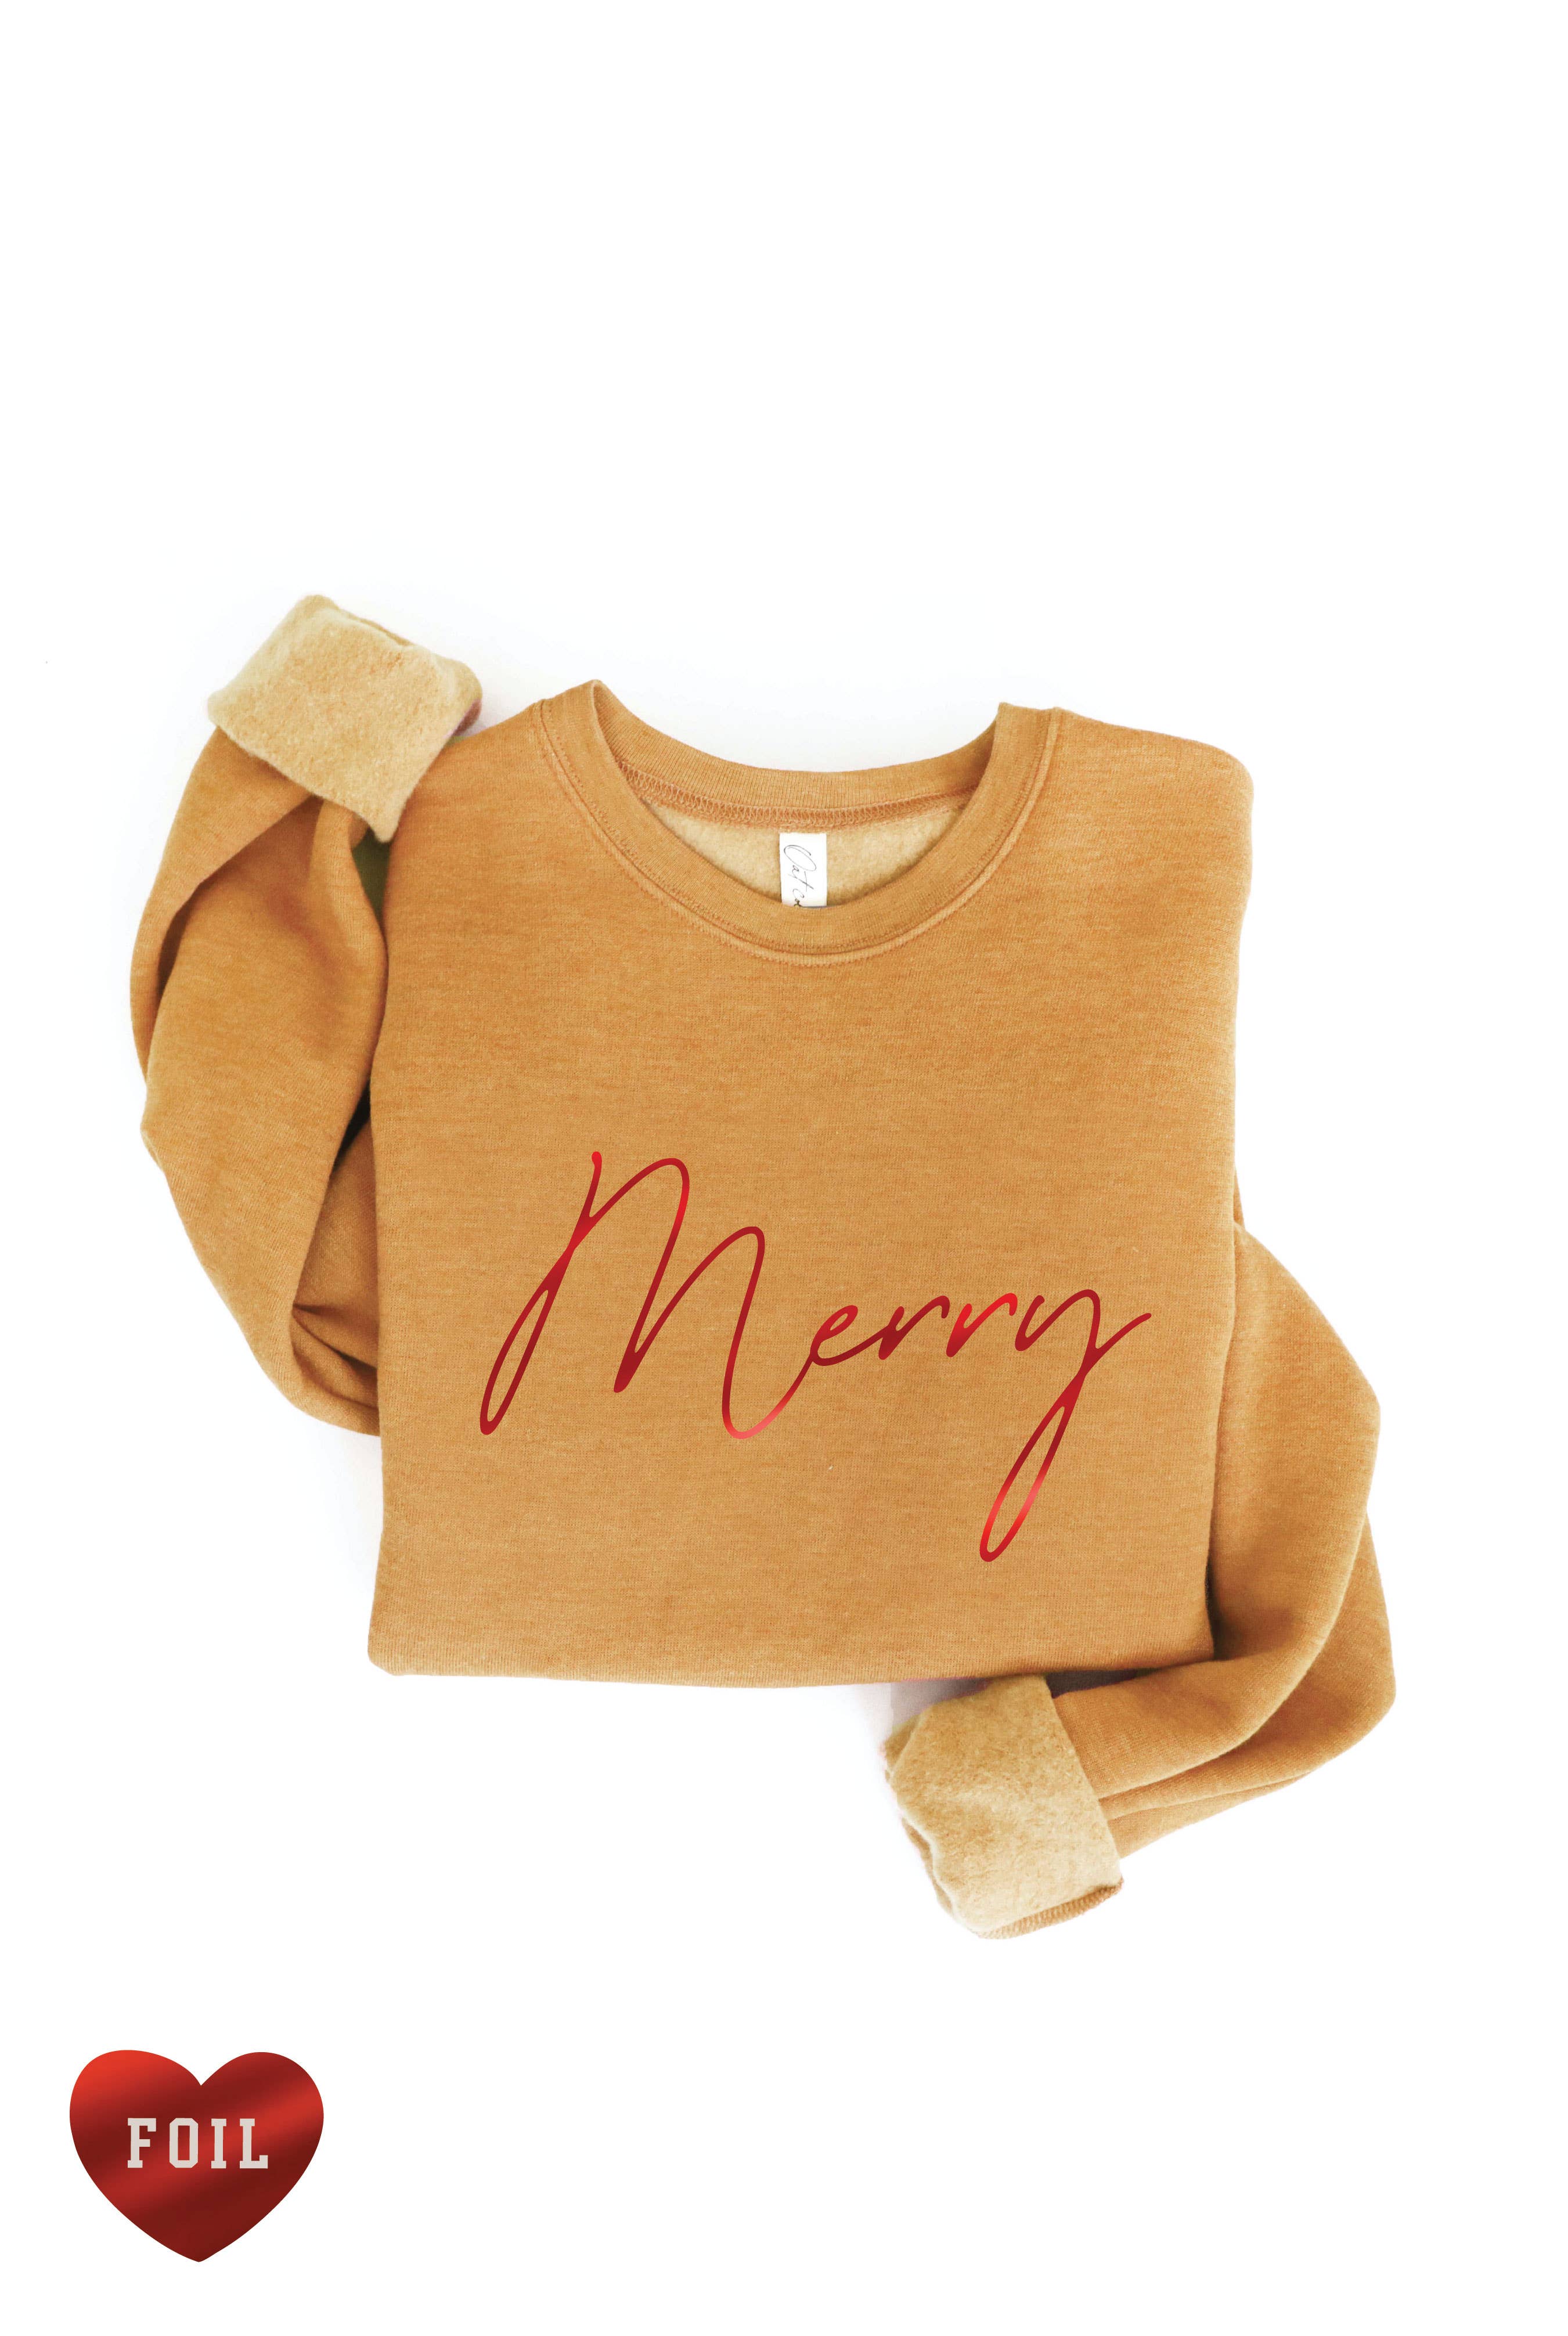 MERRY FOIL Graphic Sweatshirt: M / MAROON